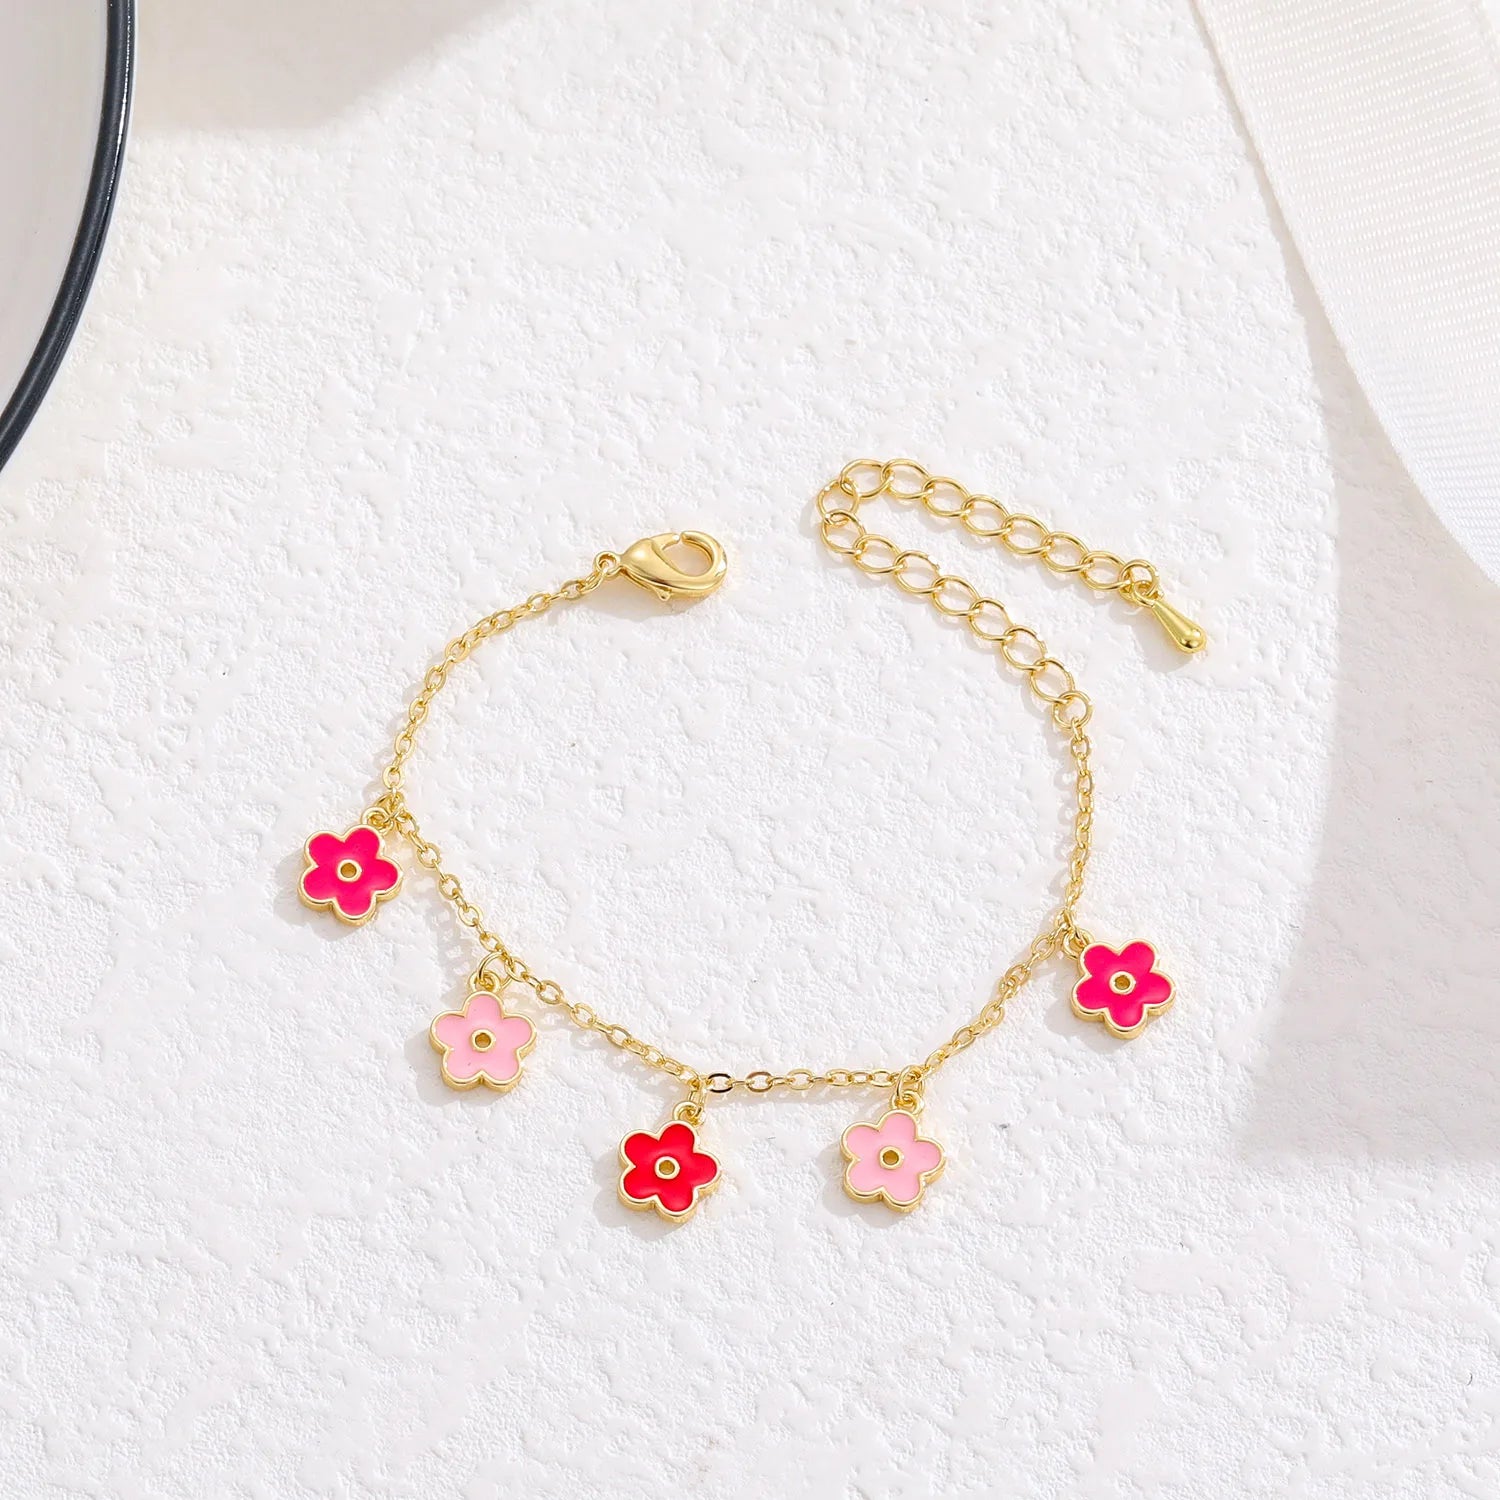 Enchanting Five Flowers Charm Bracelet: The Perfect Gift for Your Little Princess's Best Friend!